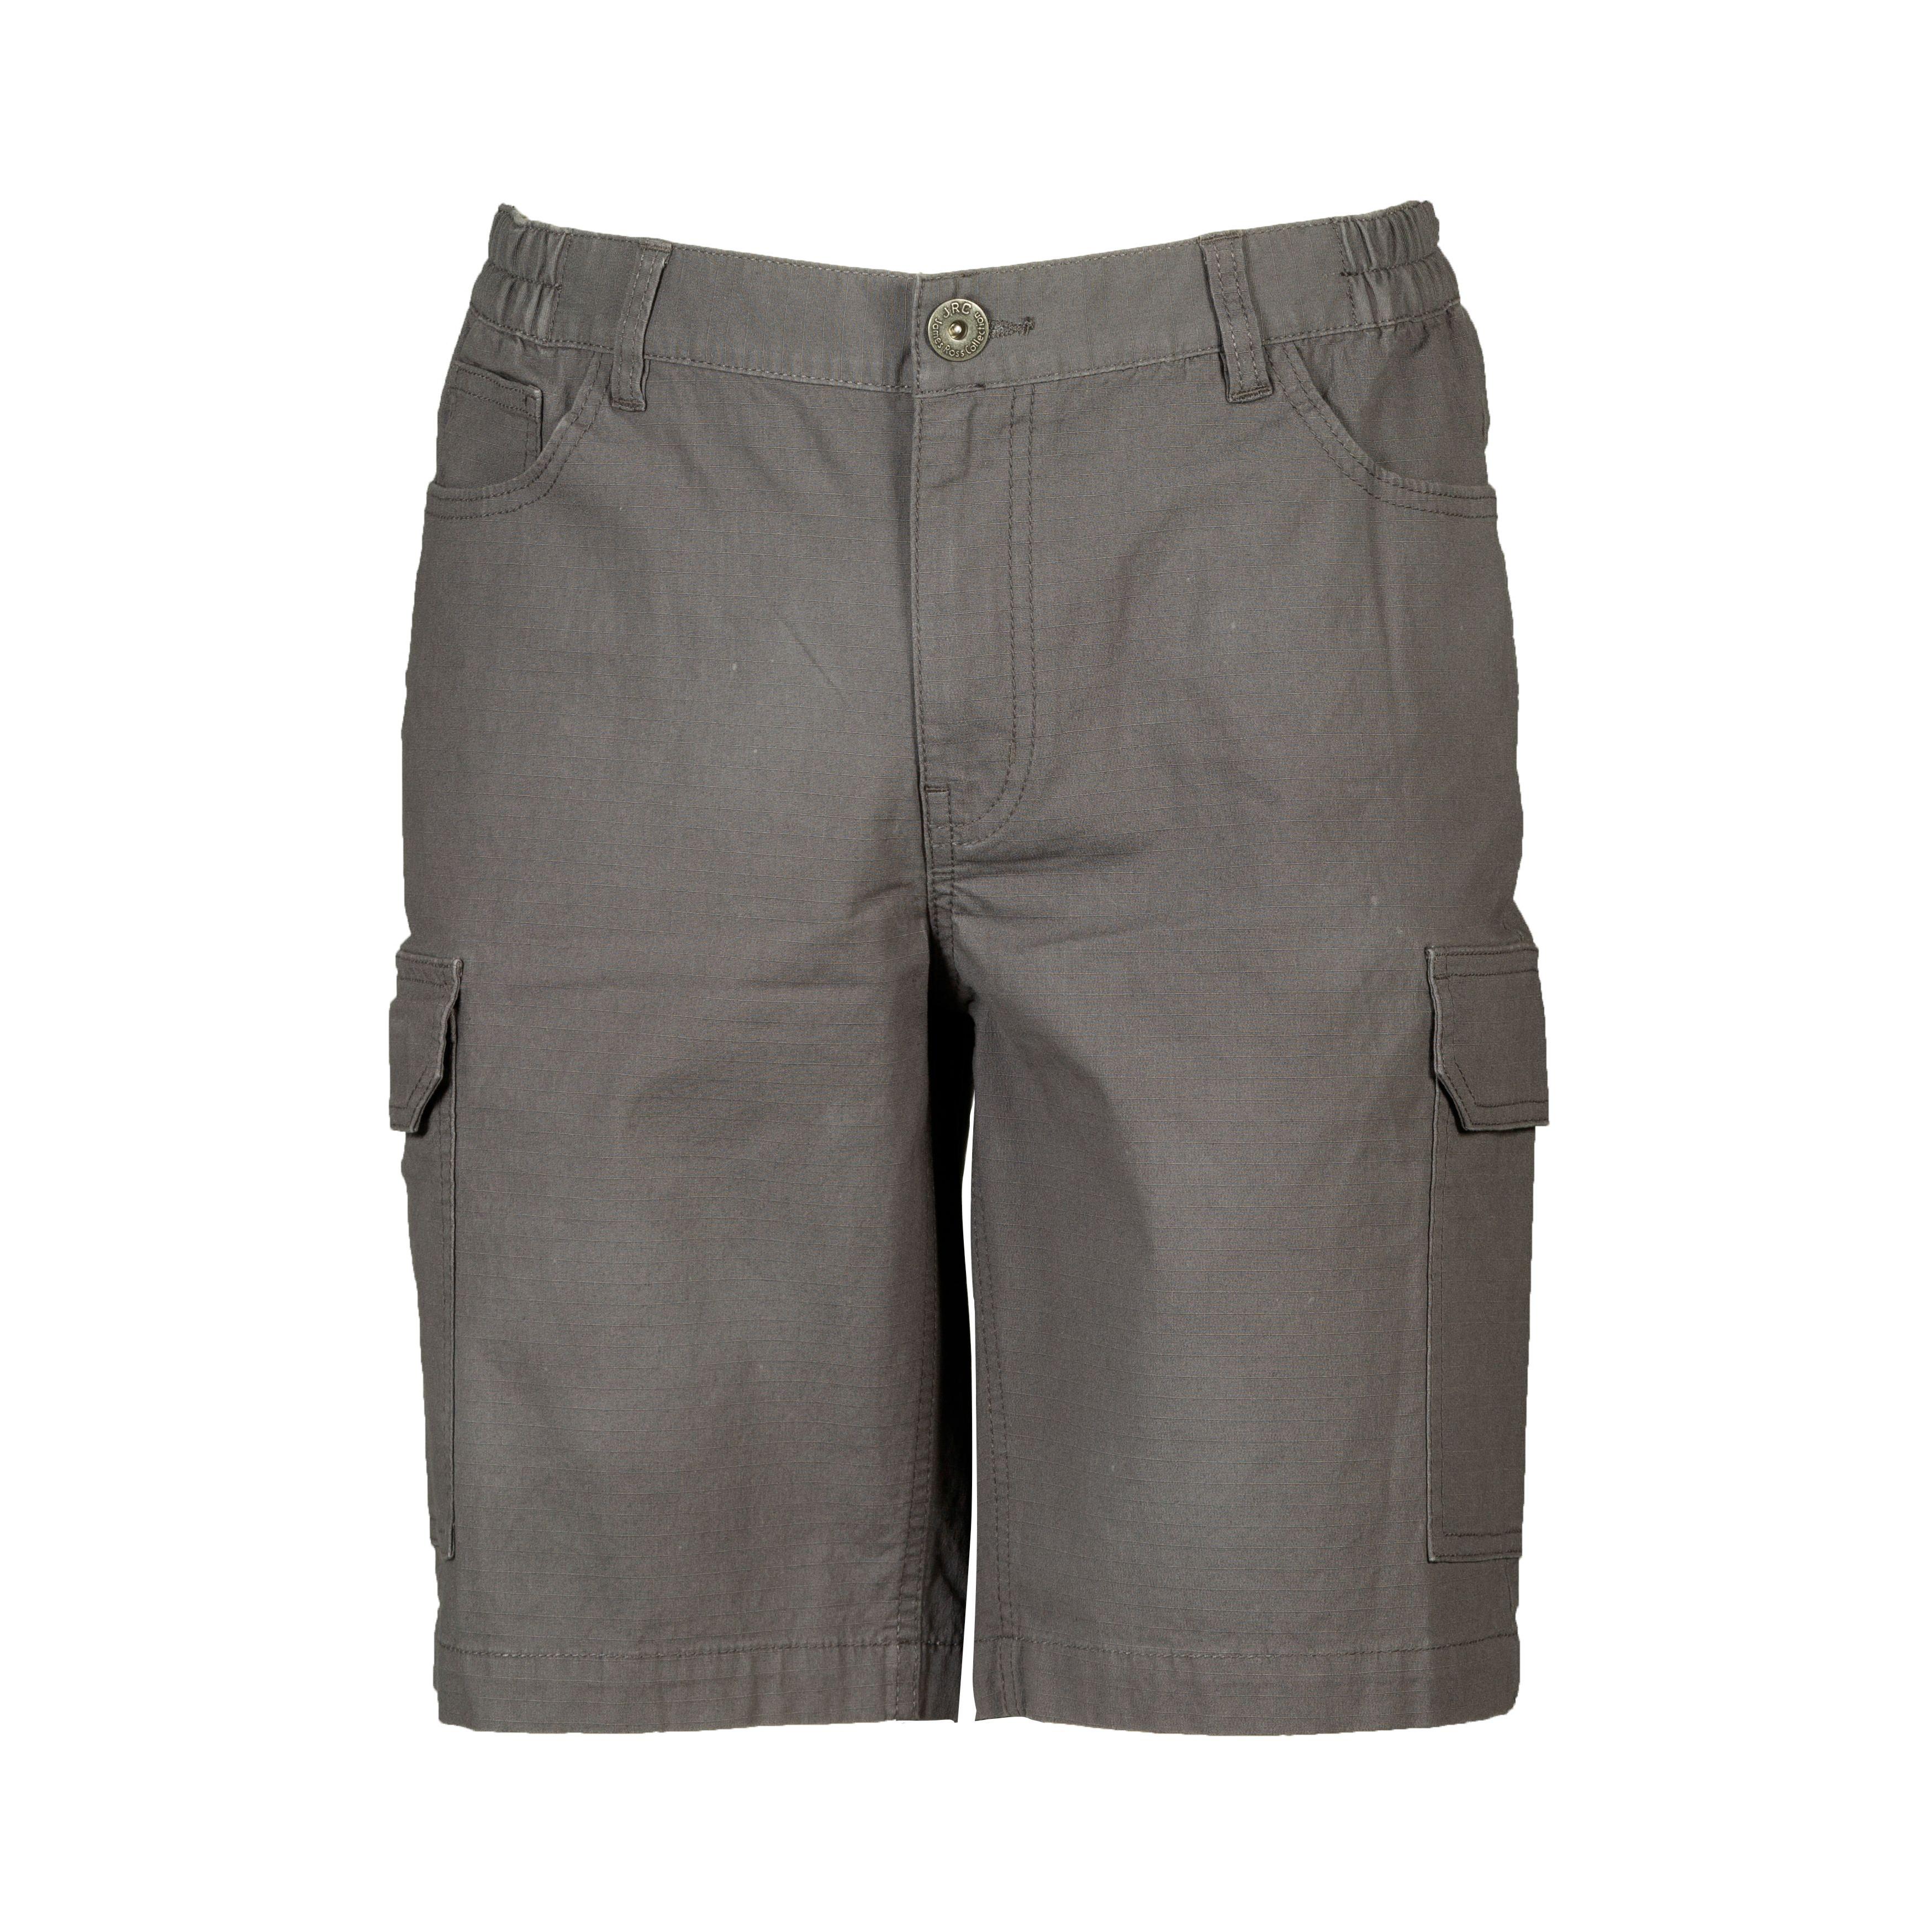 Pantaloni Cambogia James Ross 99408, massima qualit